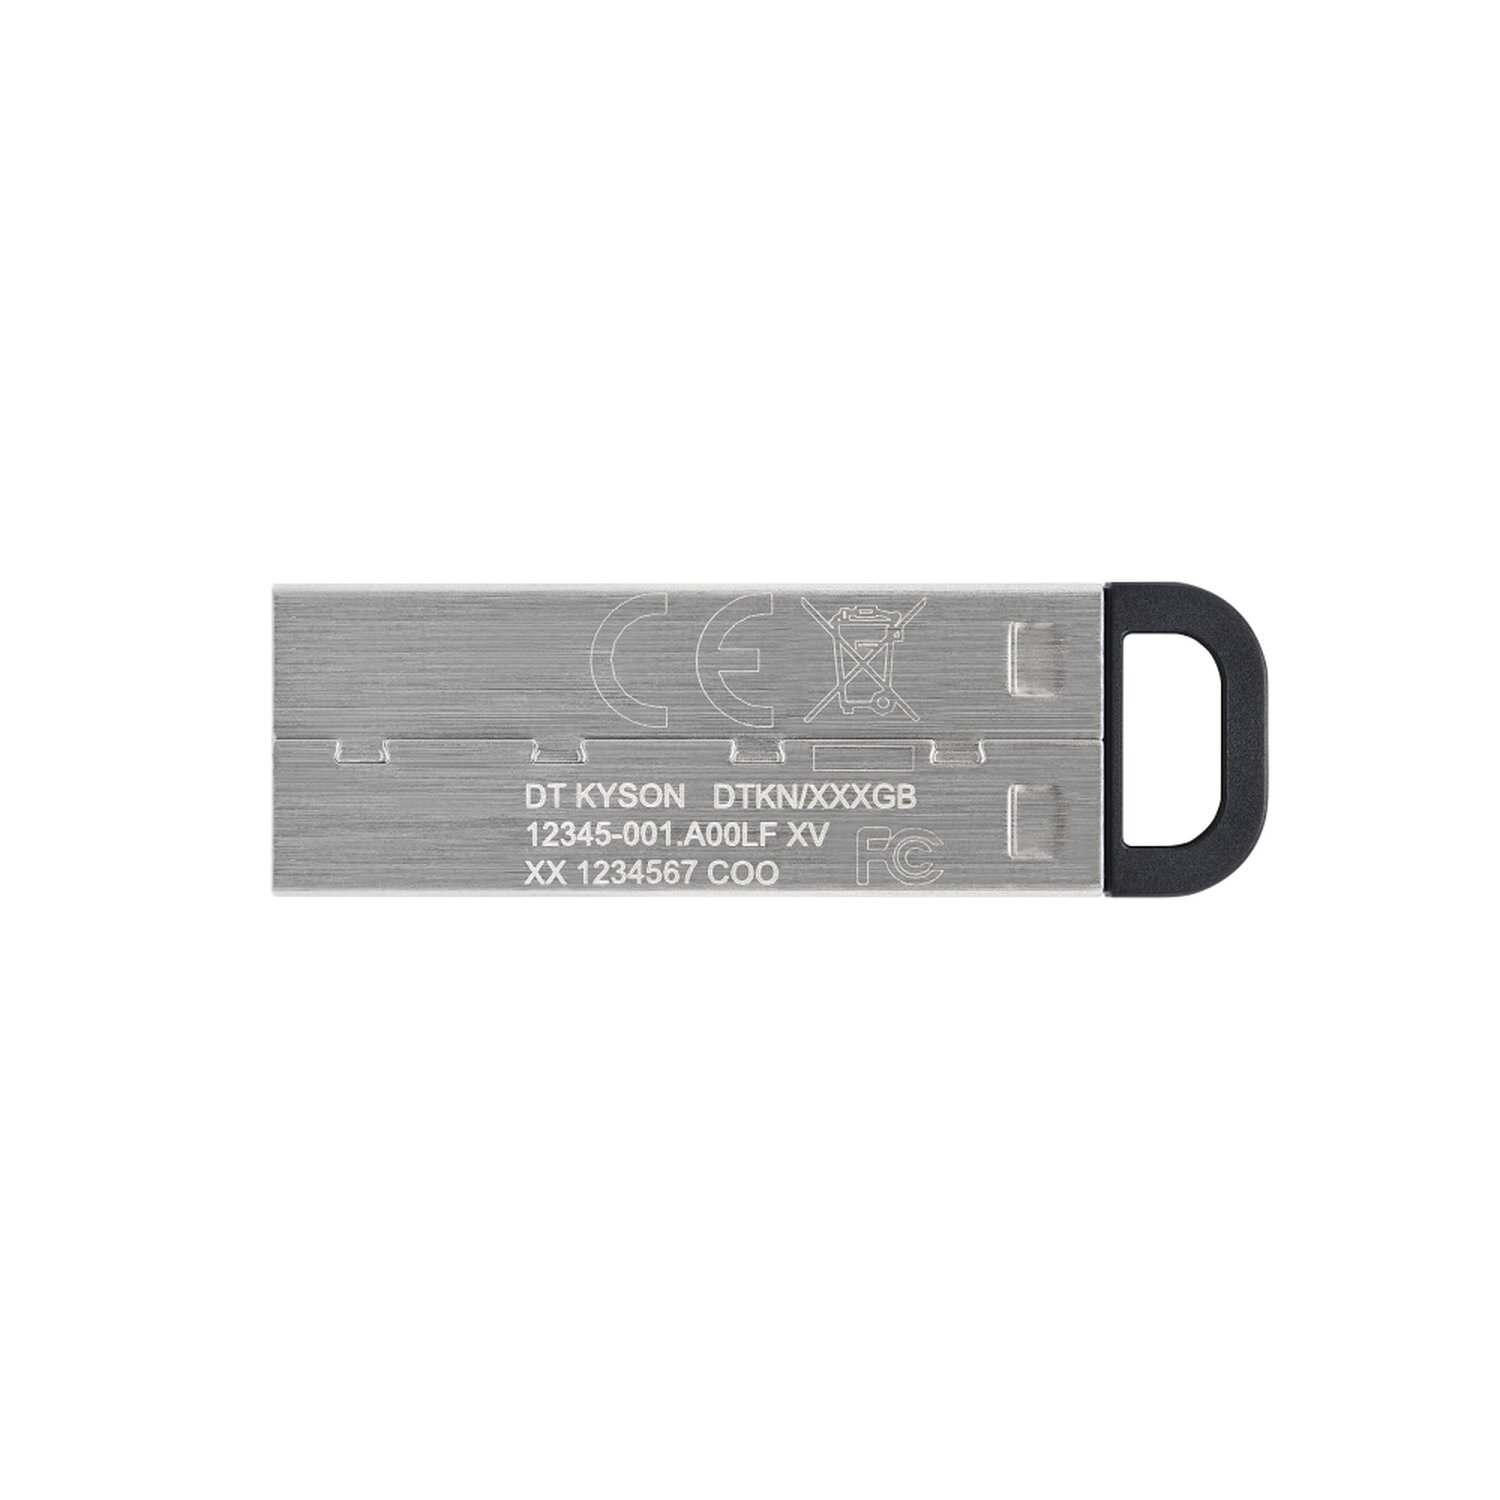 (Schwarz, Stick 128 USB GB KINGSTON Pendrive GB) DT 128